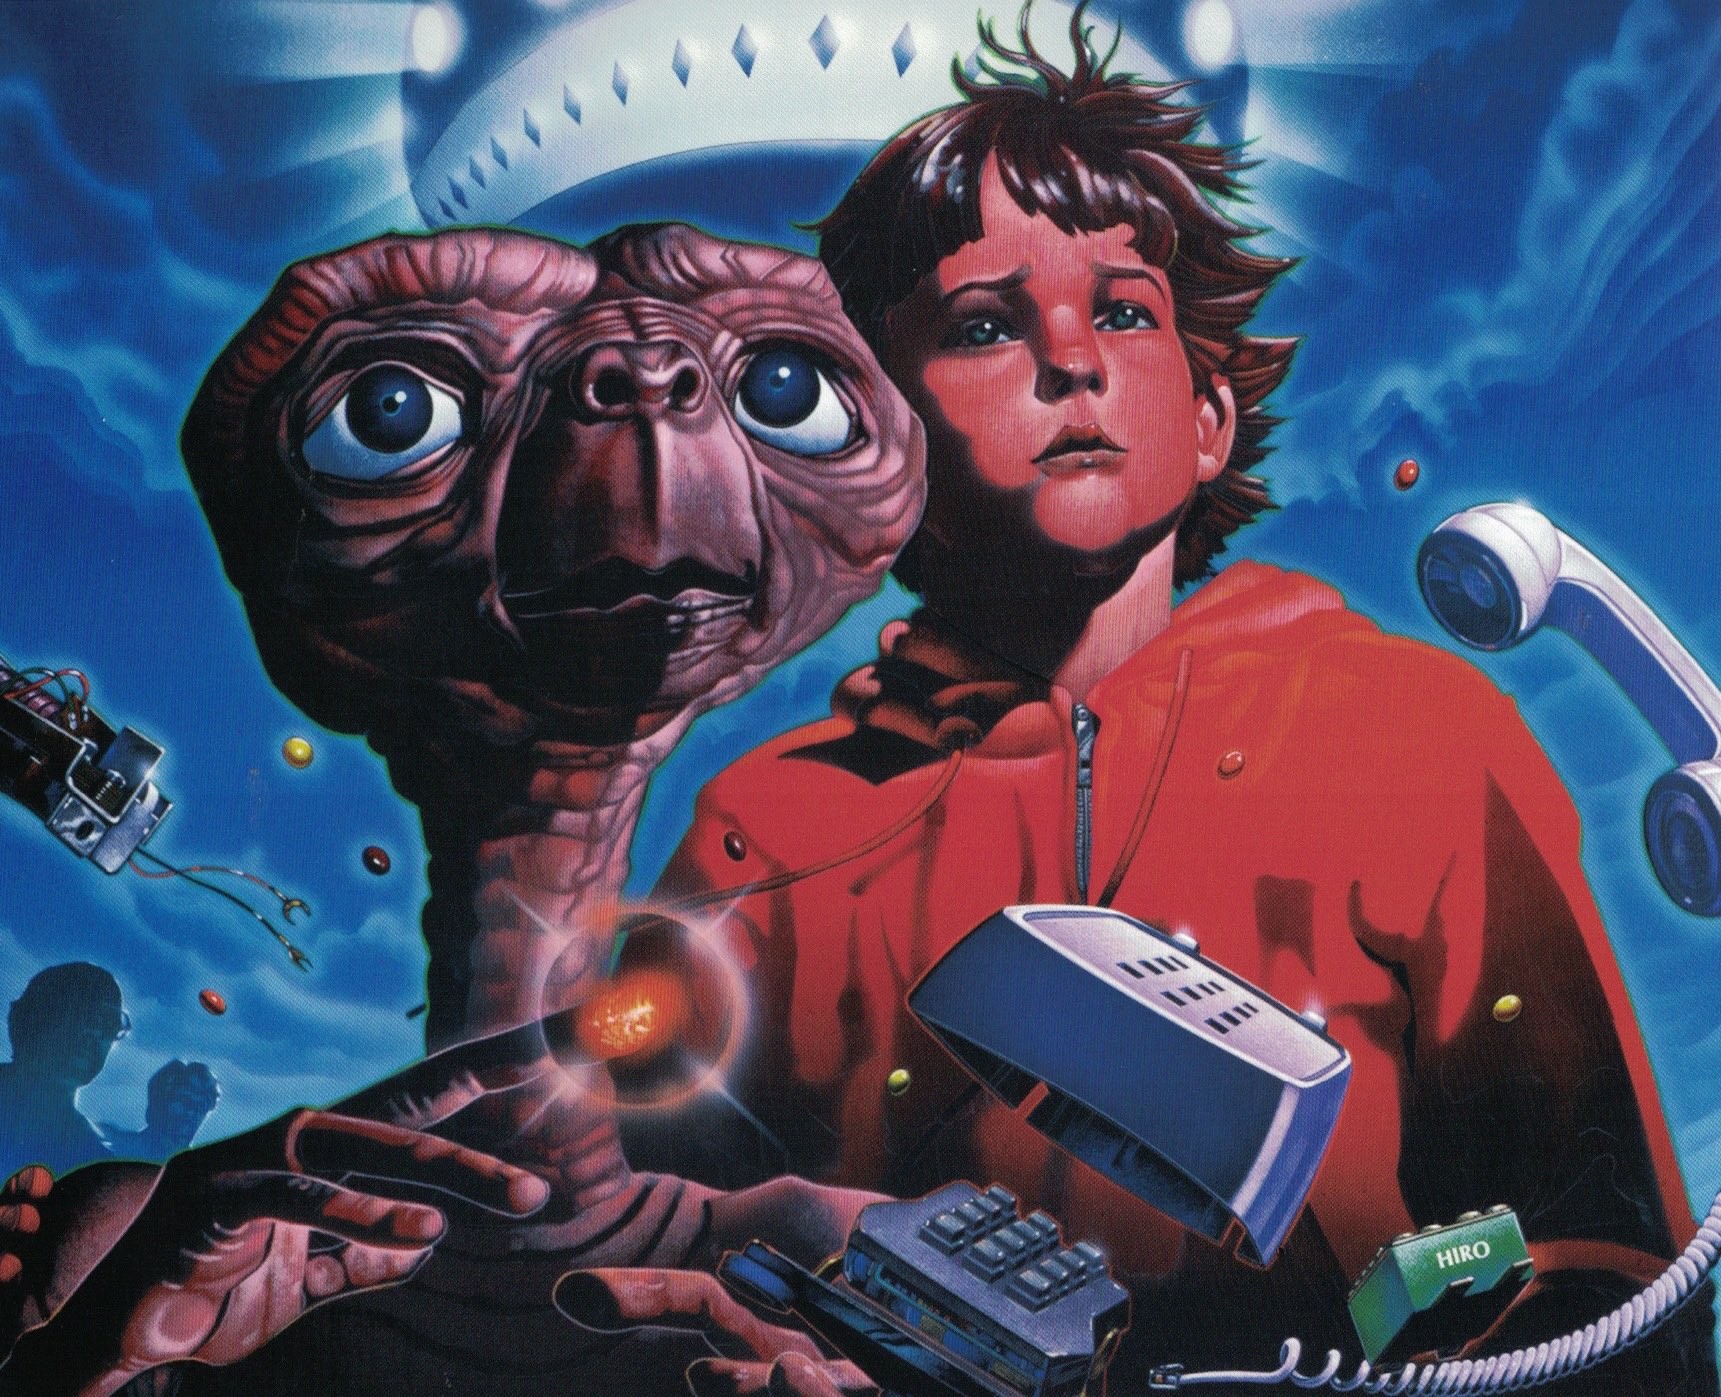 games/E.T._the_extra-terrestrial/E.T._cover_art.jpg